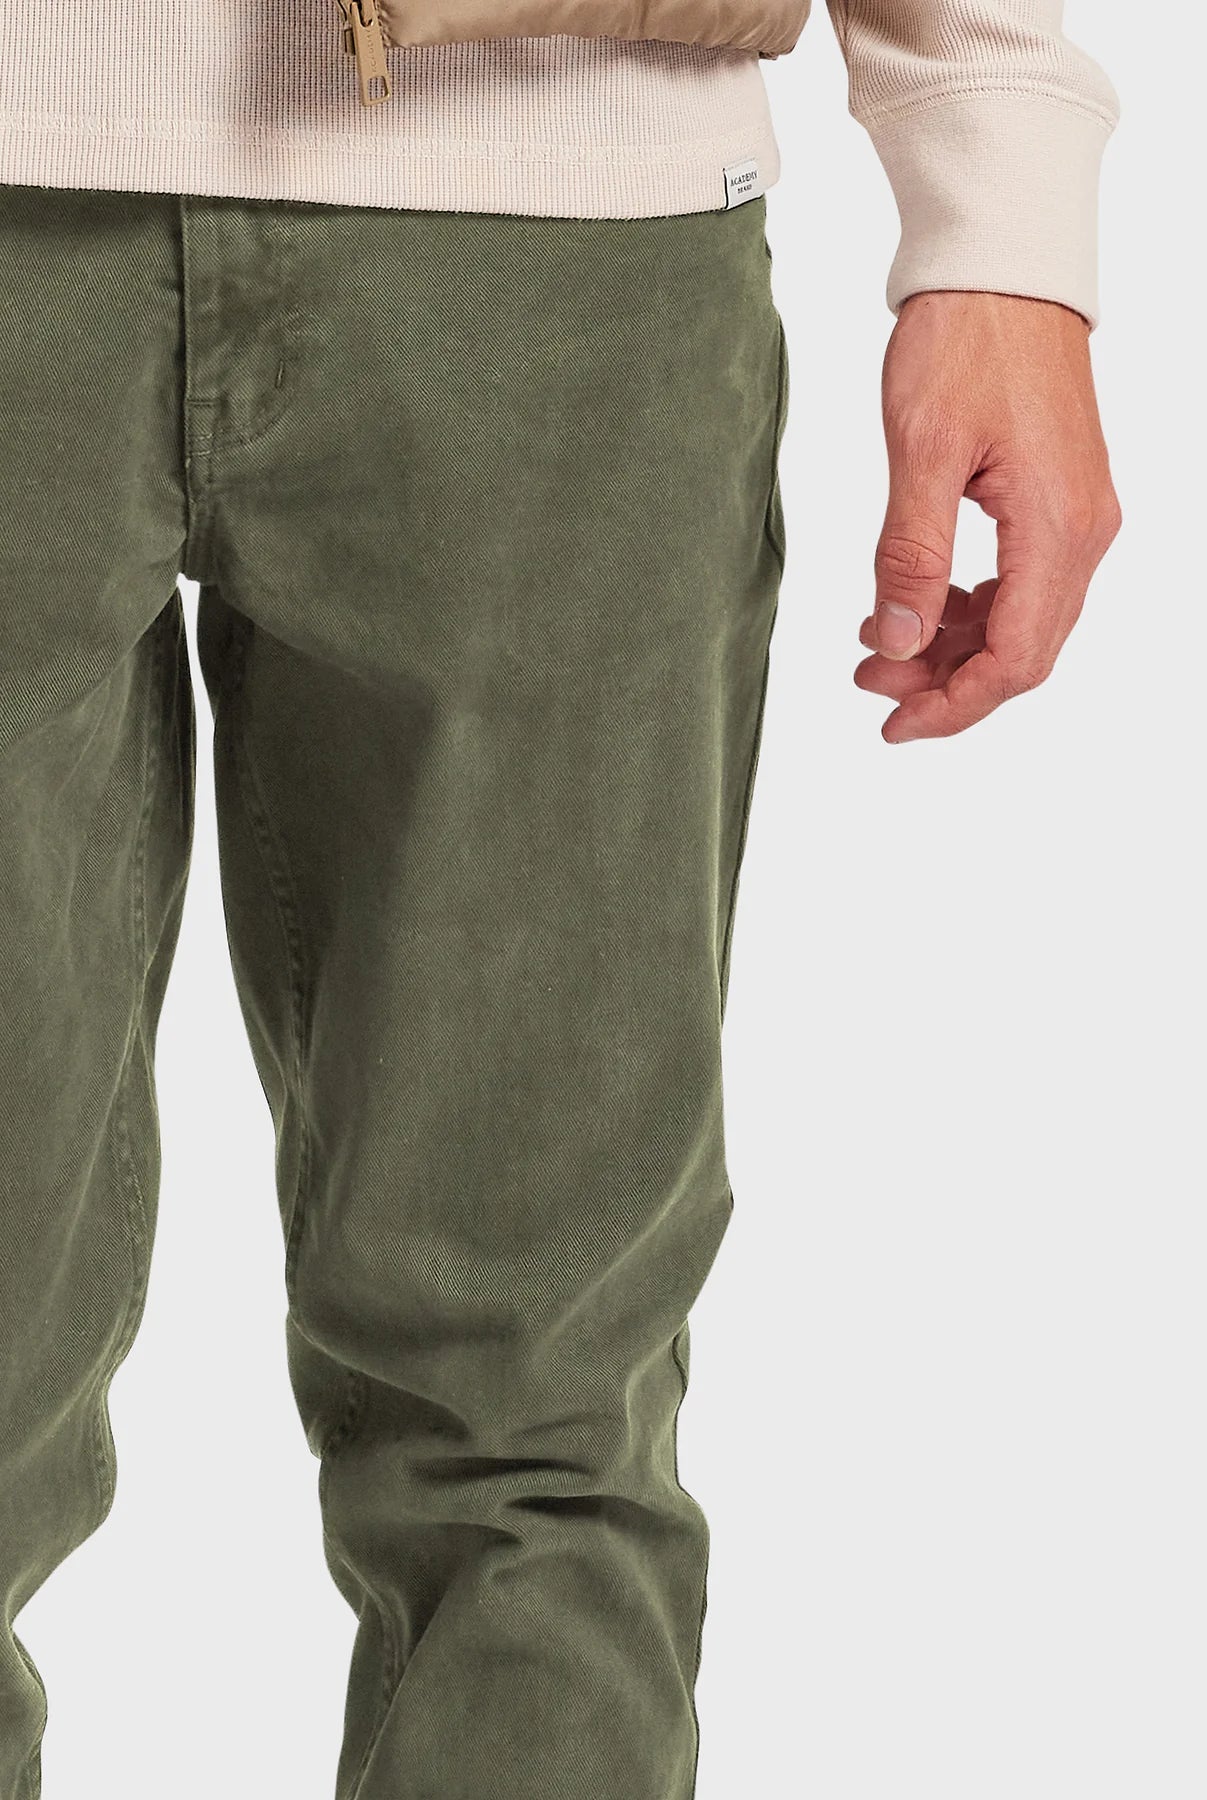 Academy Brand - Jack 5 Pocket Pant Beluga Grey